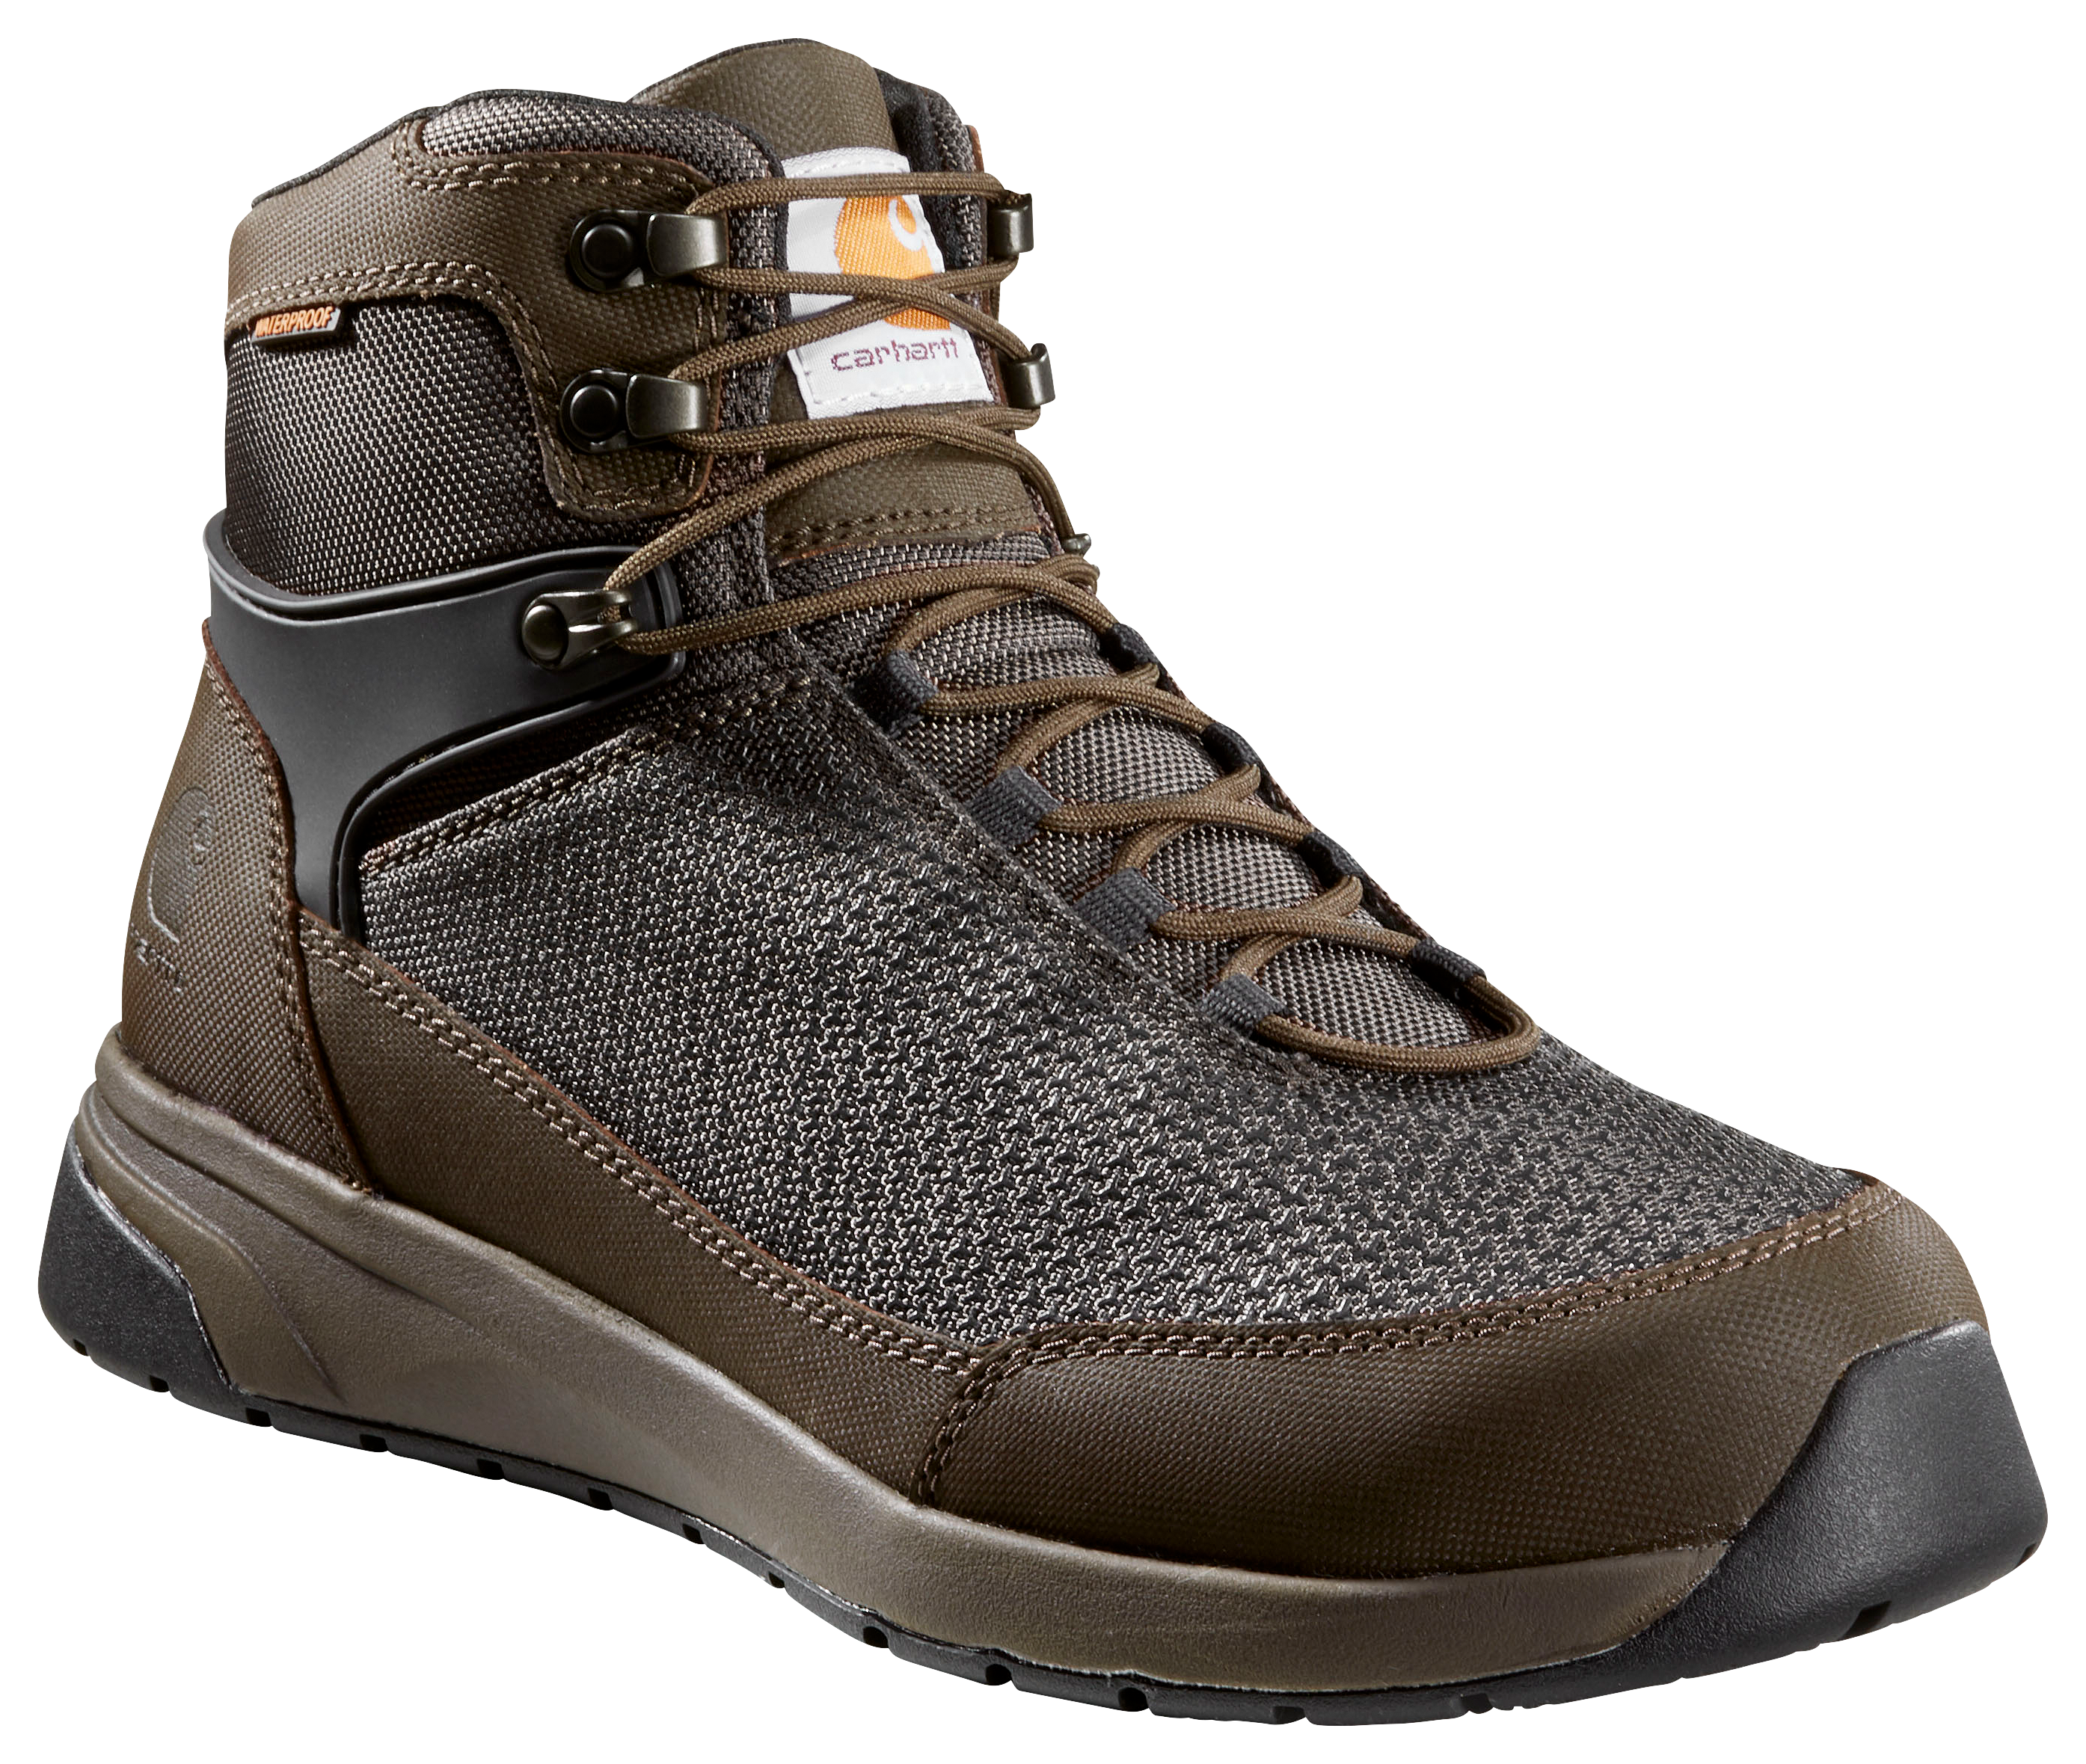 Carhartt Force 6"" Nano Composite-Toe Work Boots for Men - Espresso - 11.5W